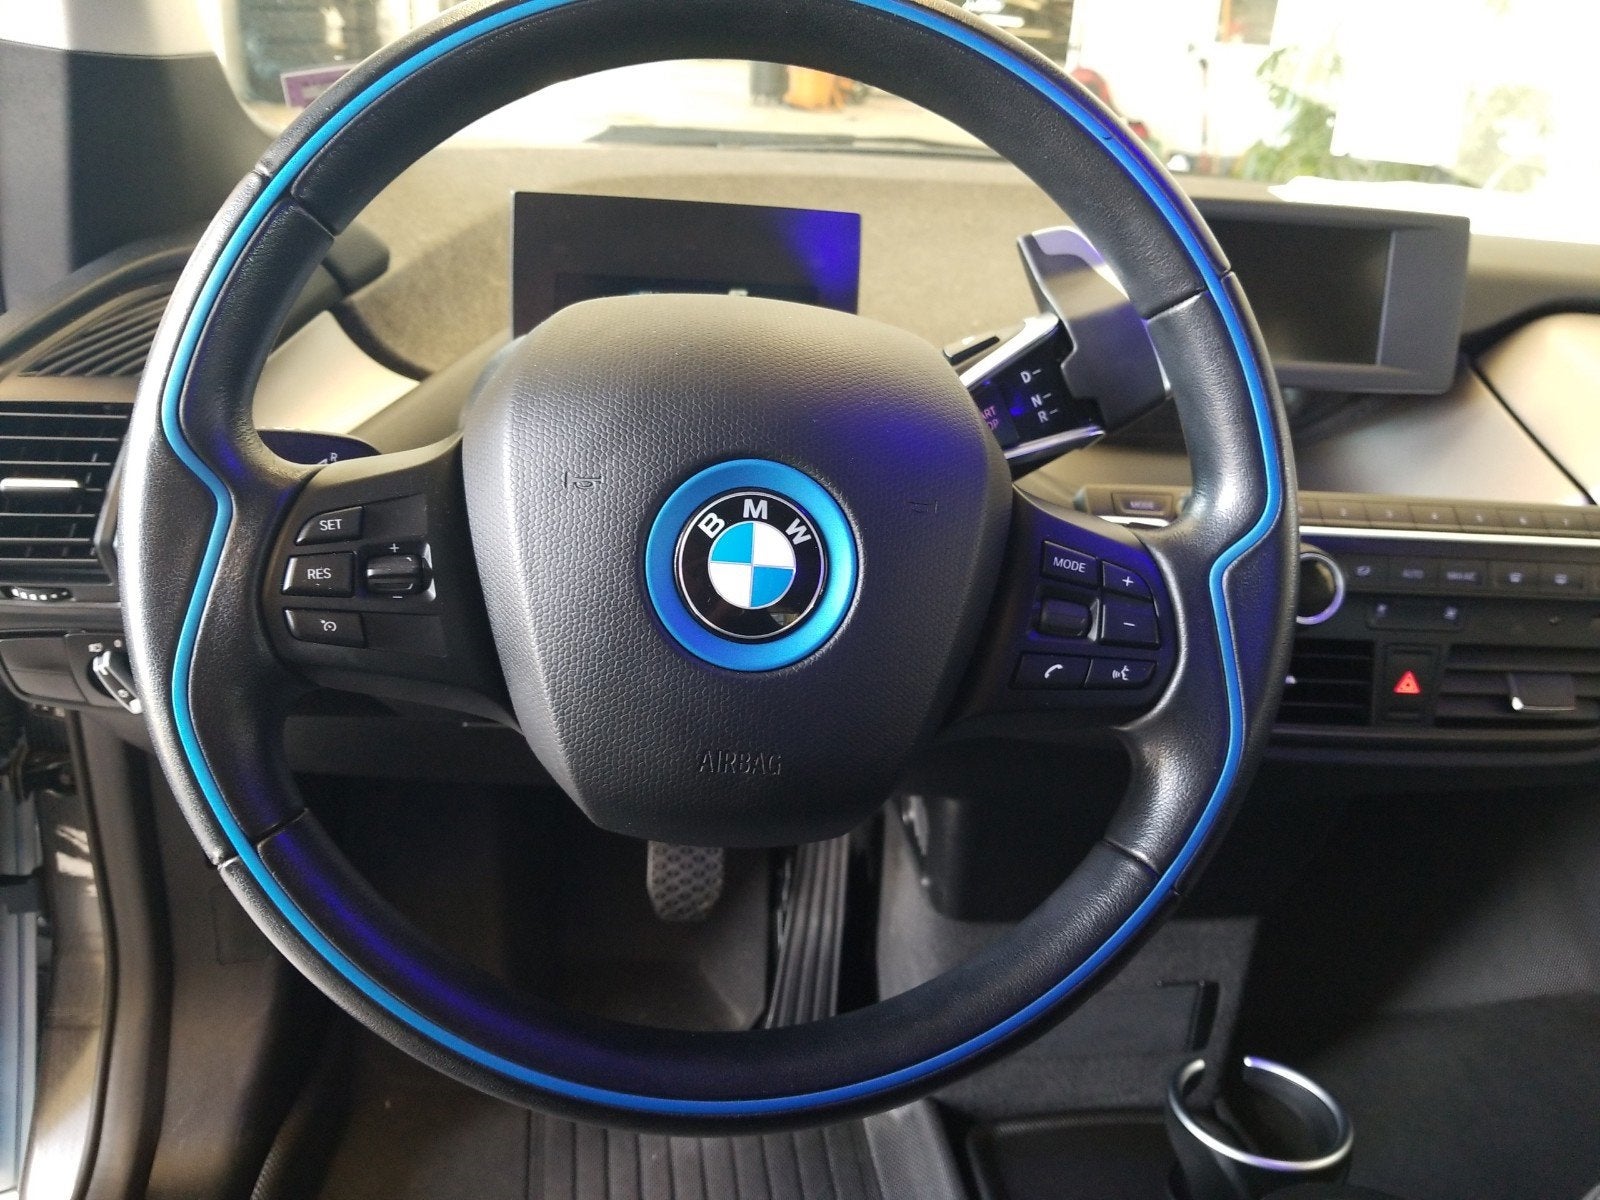 2017 BMW i3 94 Ah